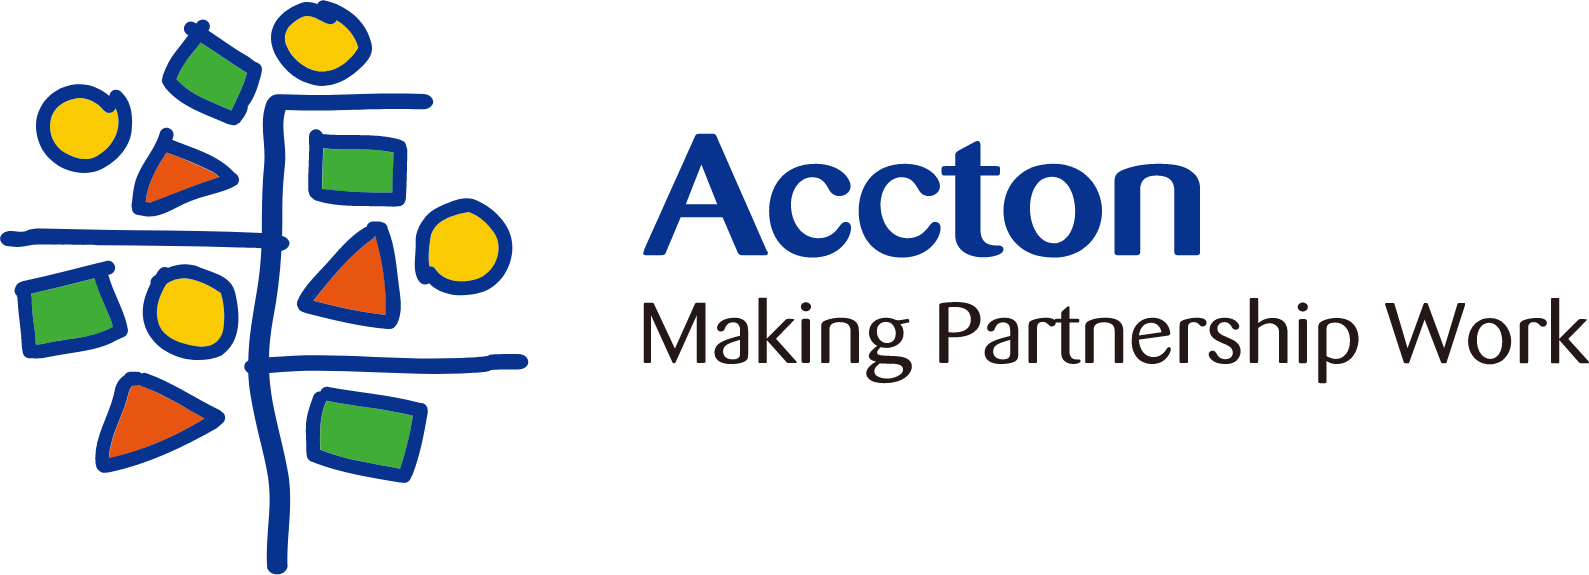 Accton Technology logo large (transparent PNG)